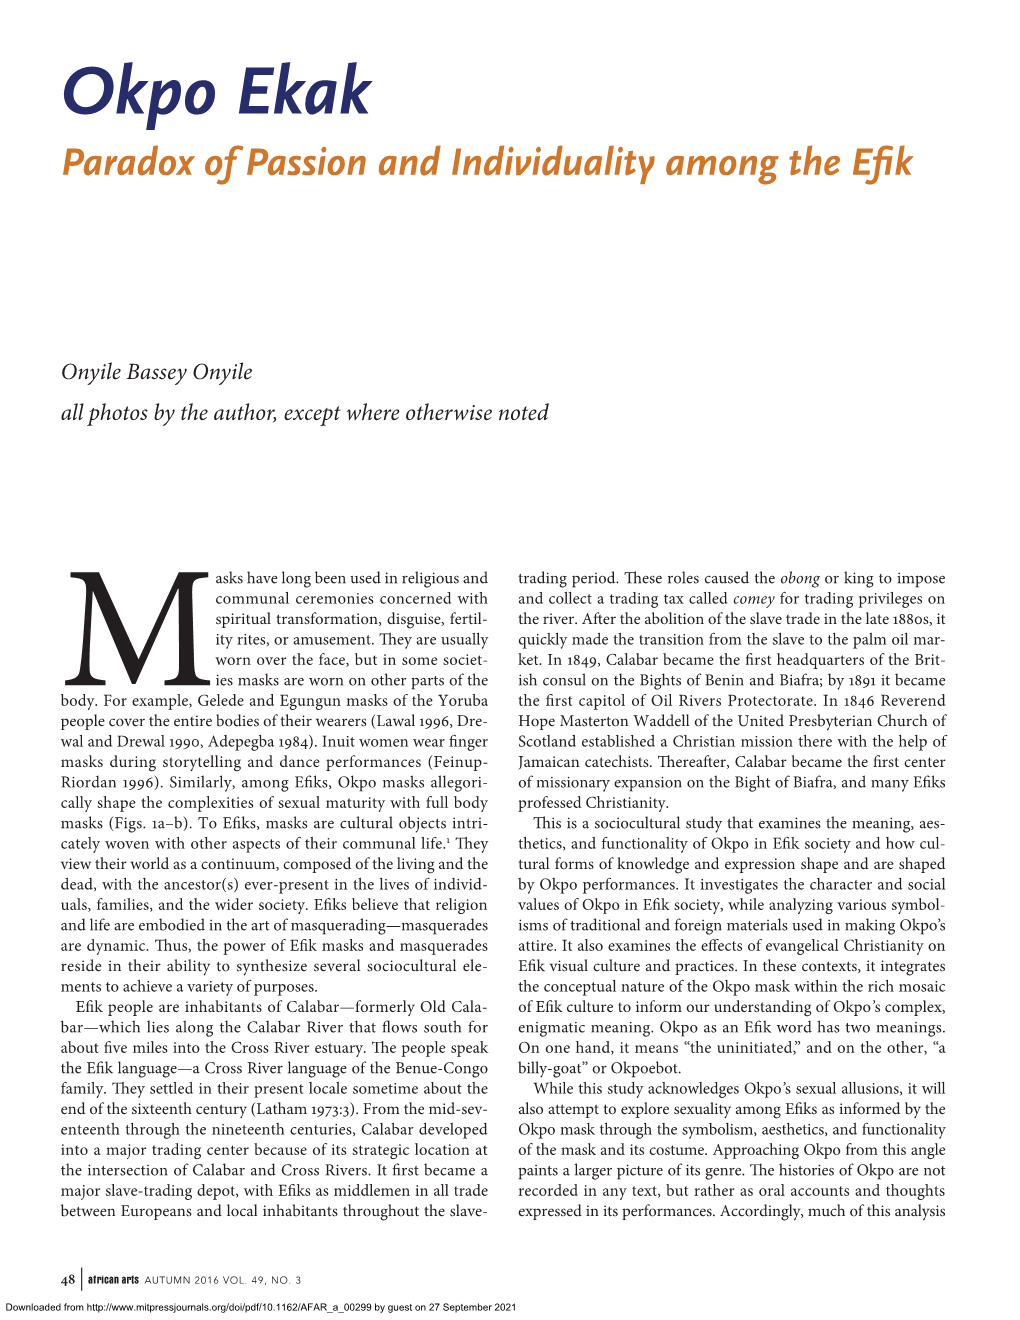 Okpo Ekak Paradox of Passion and Individuality Among the Eﬁ K